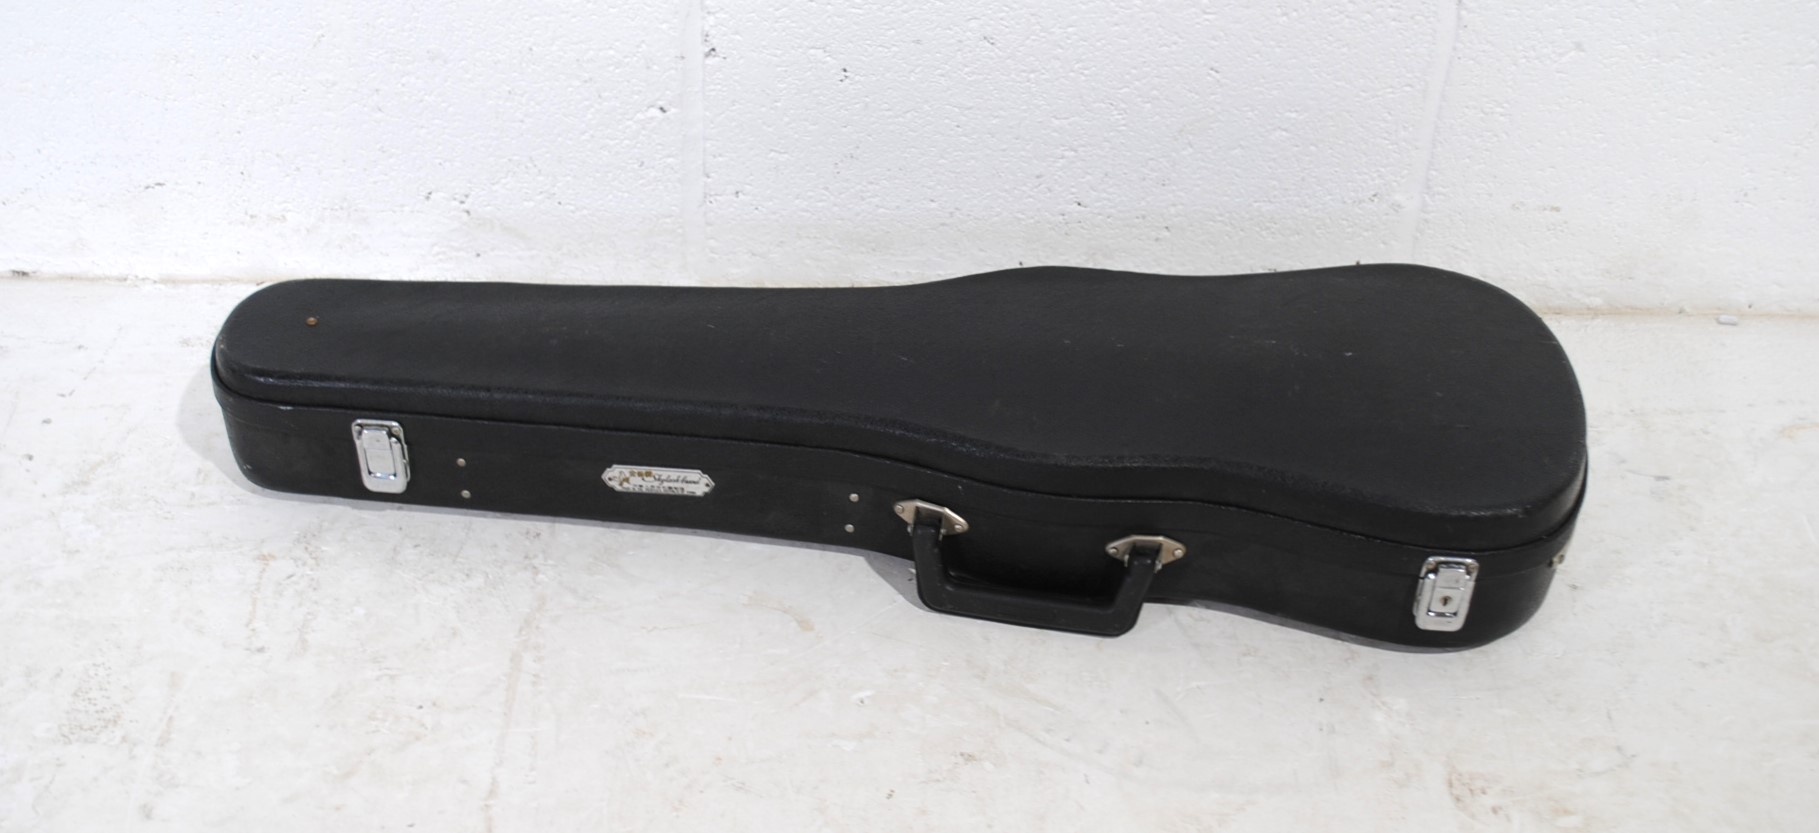 A 3/4 size violin, with Skylark Brand hard case - length of violin 56cm - Image 11 of 12